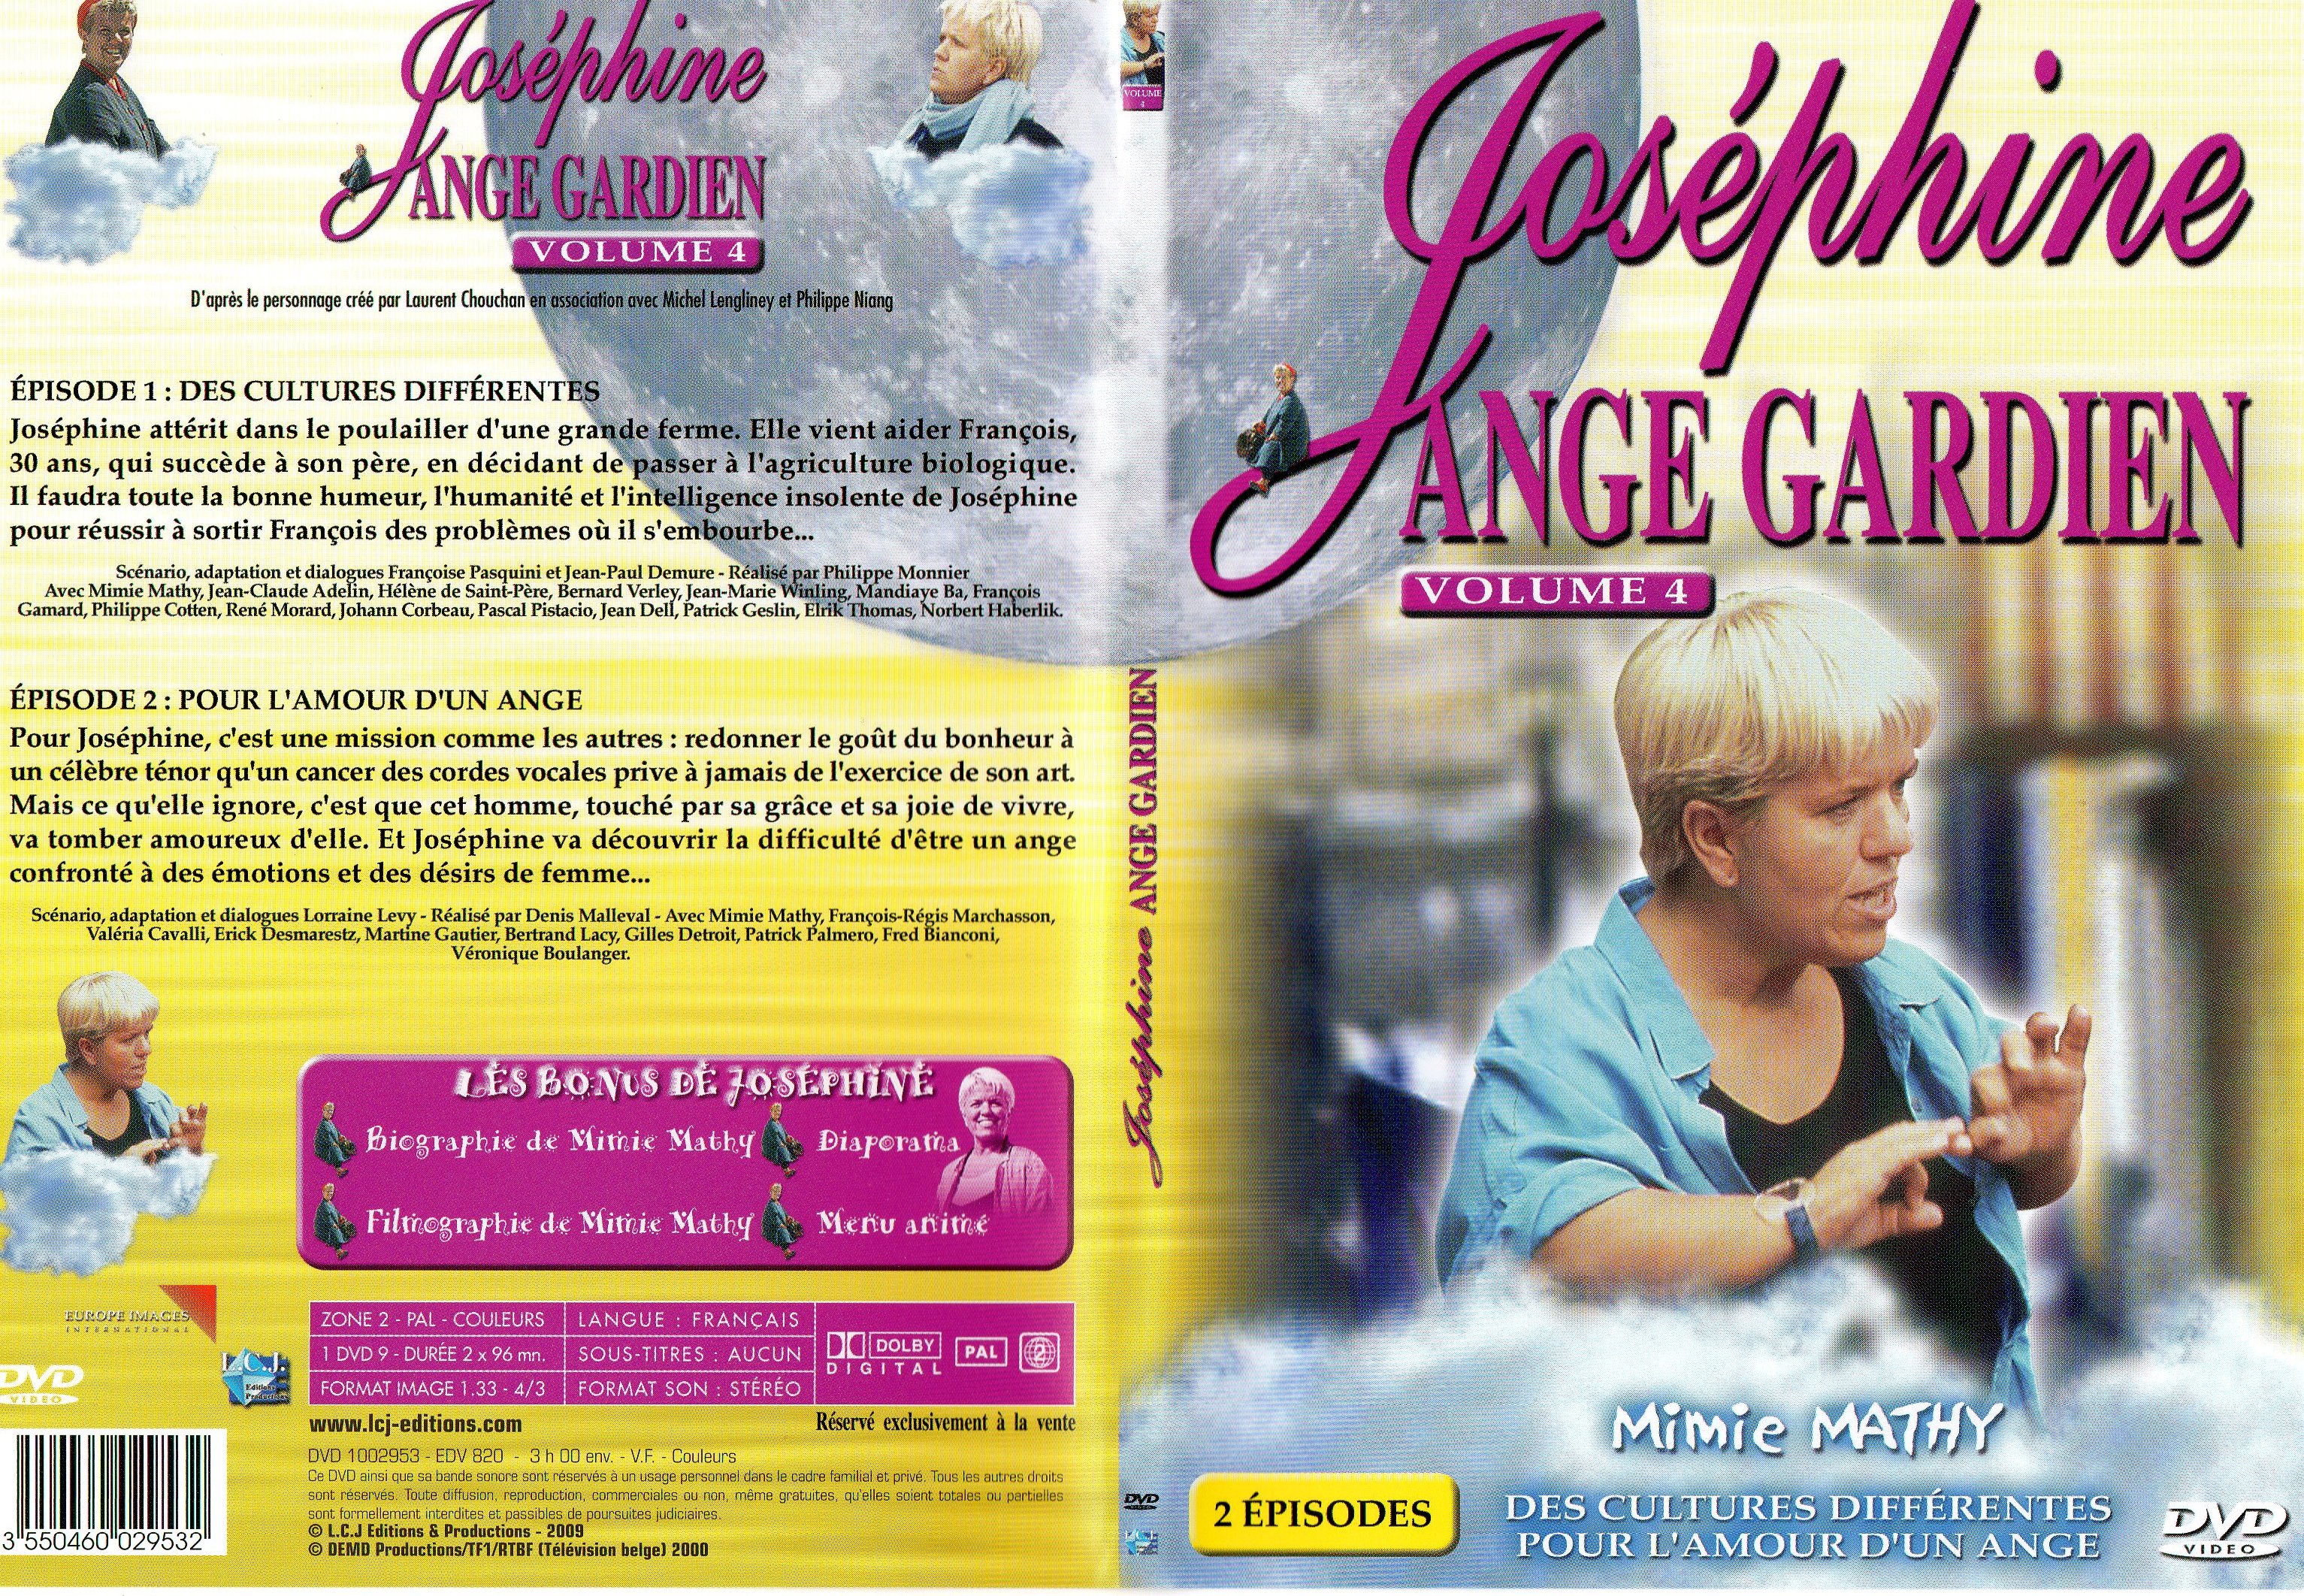 Jaquette DVD Josphine Ange Gardien saison 1 DVD 4